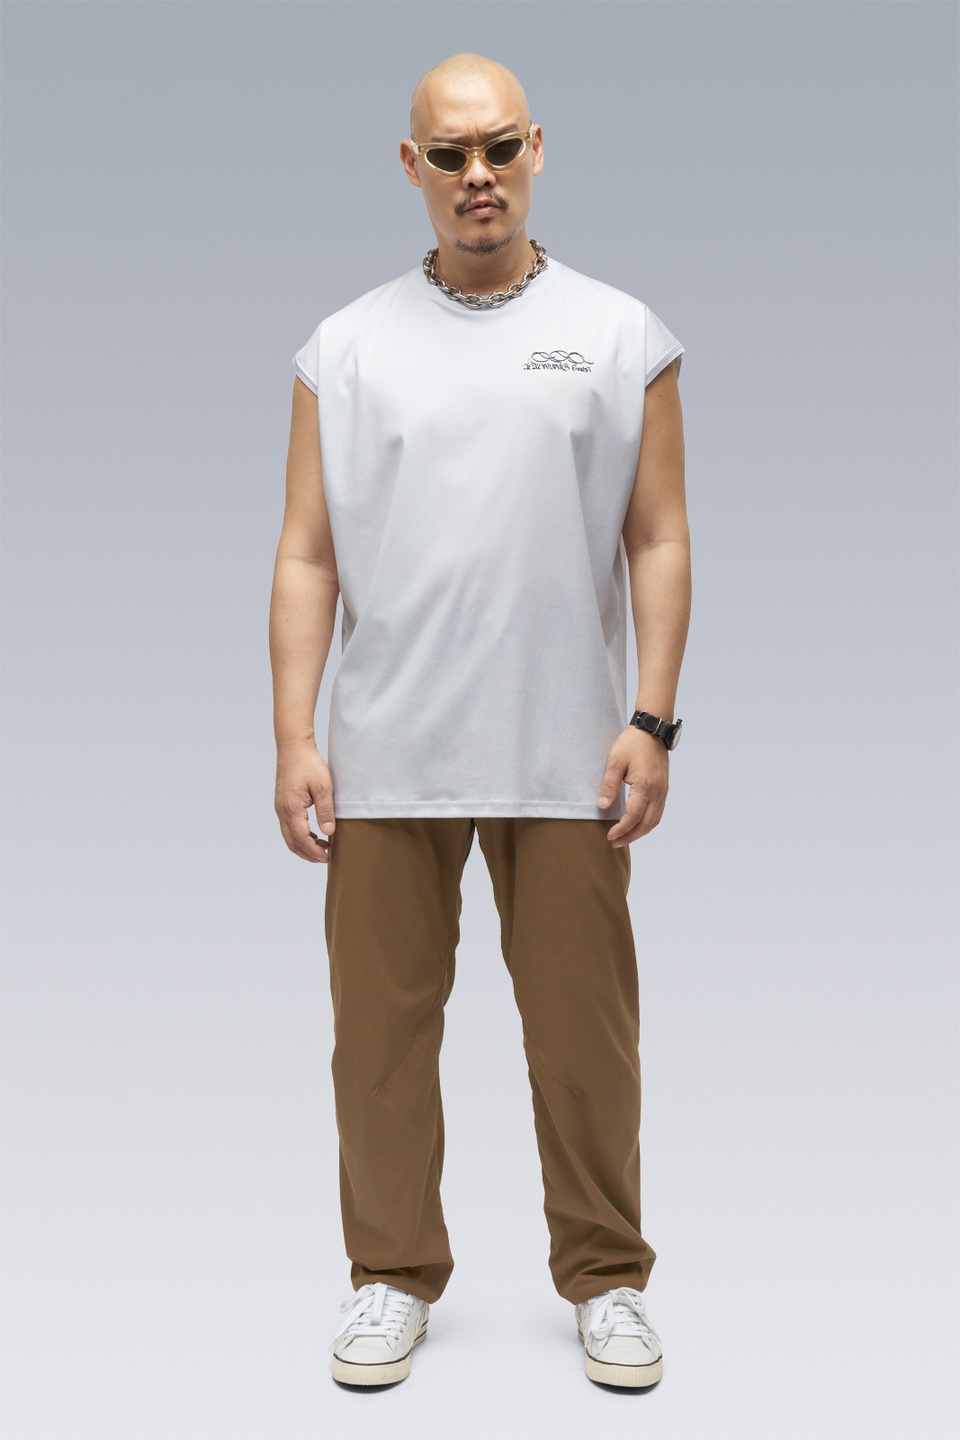 S25-PR-A 100% Cotton Mercerized Sleeveless T-shirt White - 1